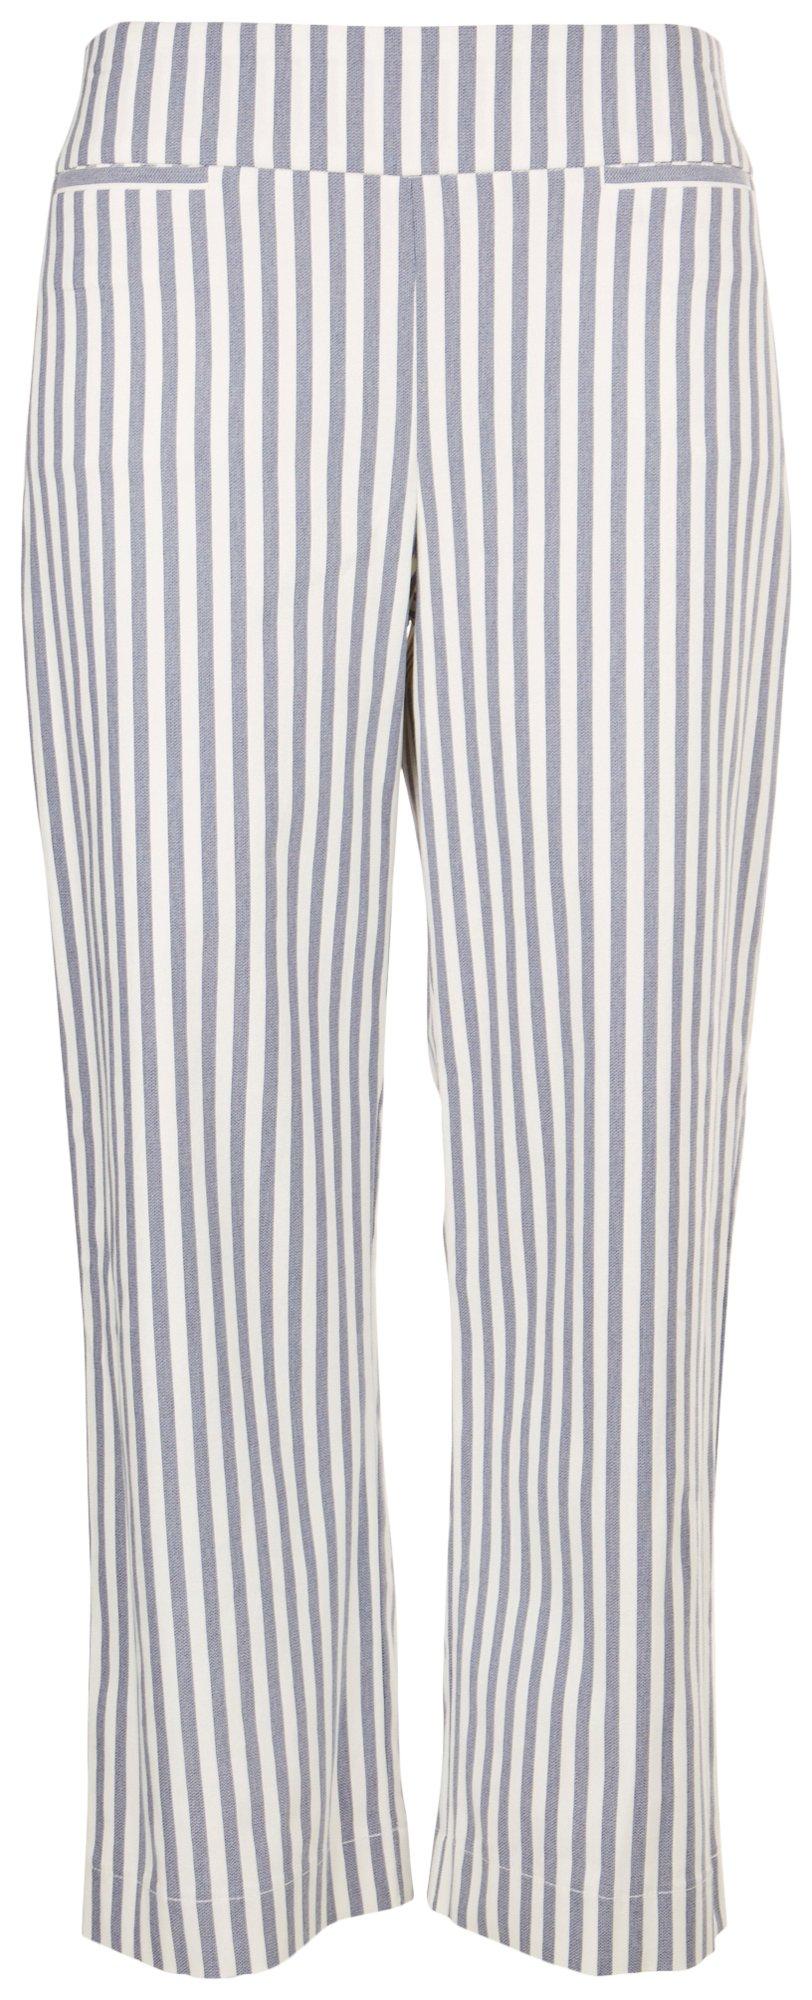 Womens Striped Pants